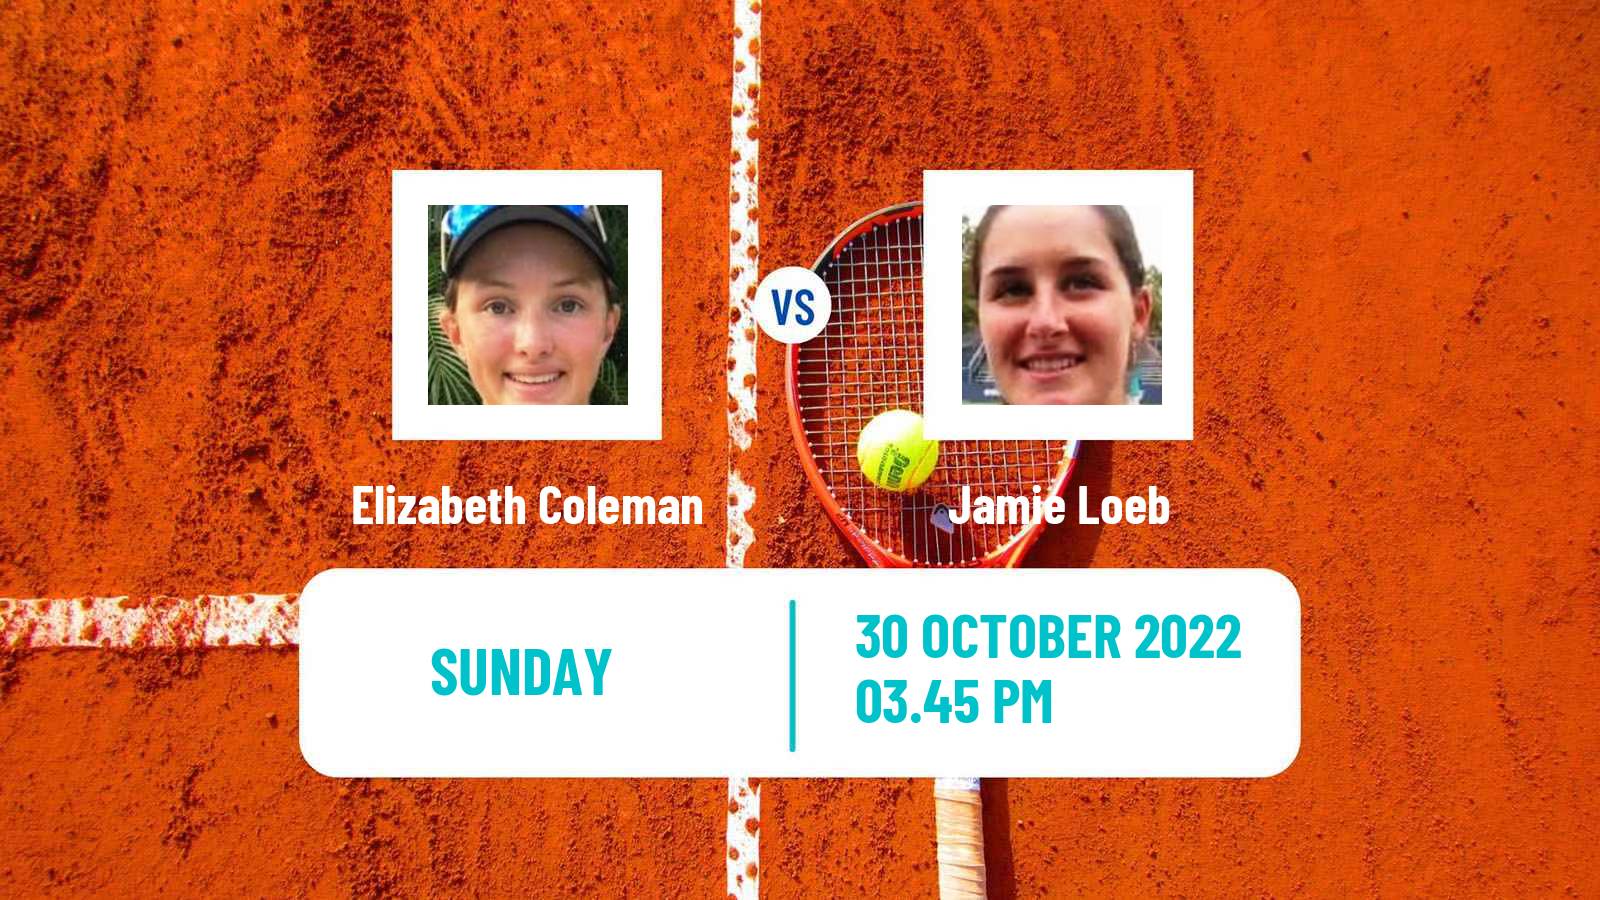 Tennis ATP Challenger Elizabeth Coleman - Jamie Loeb